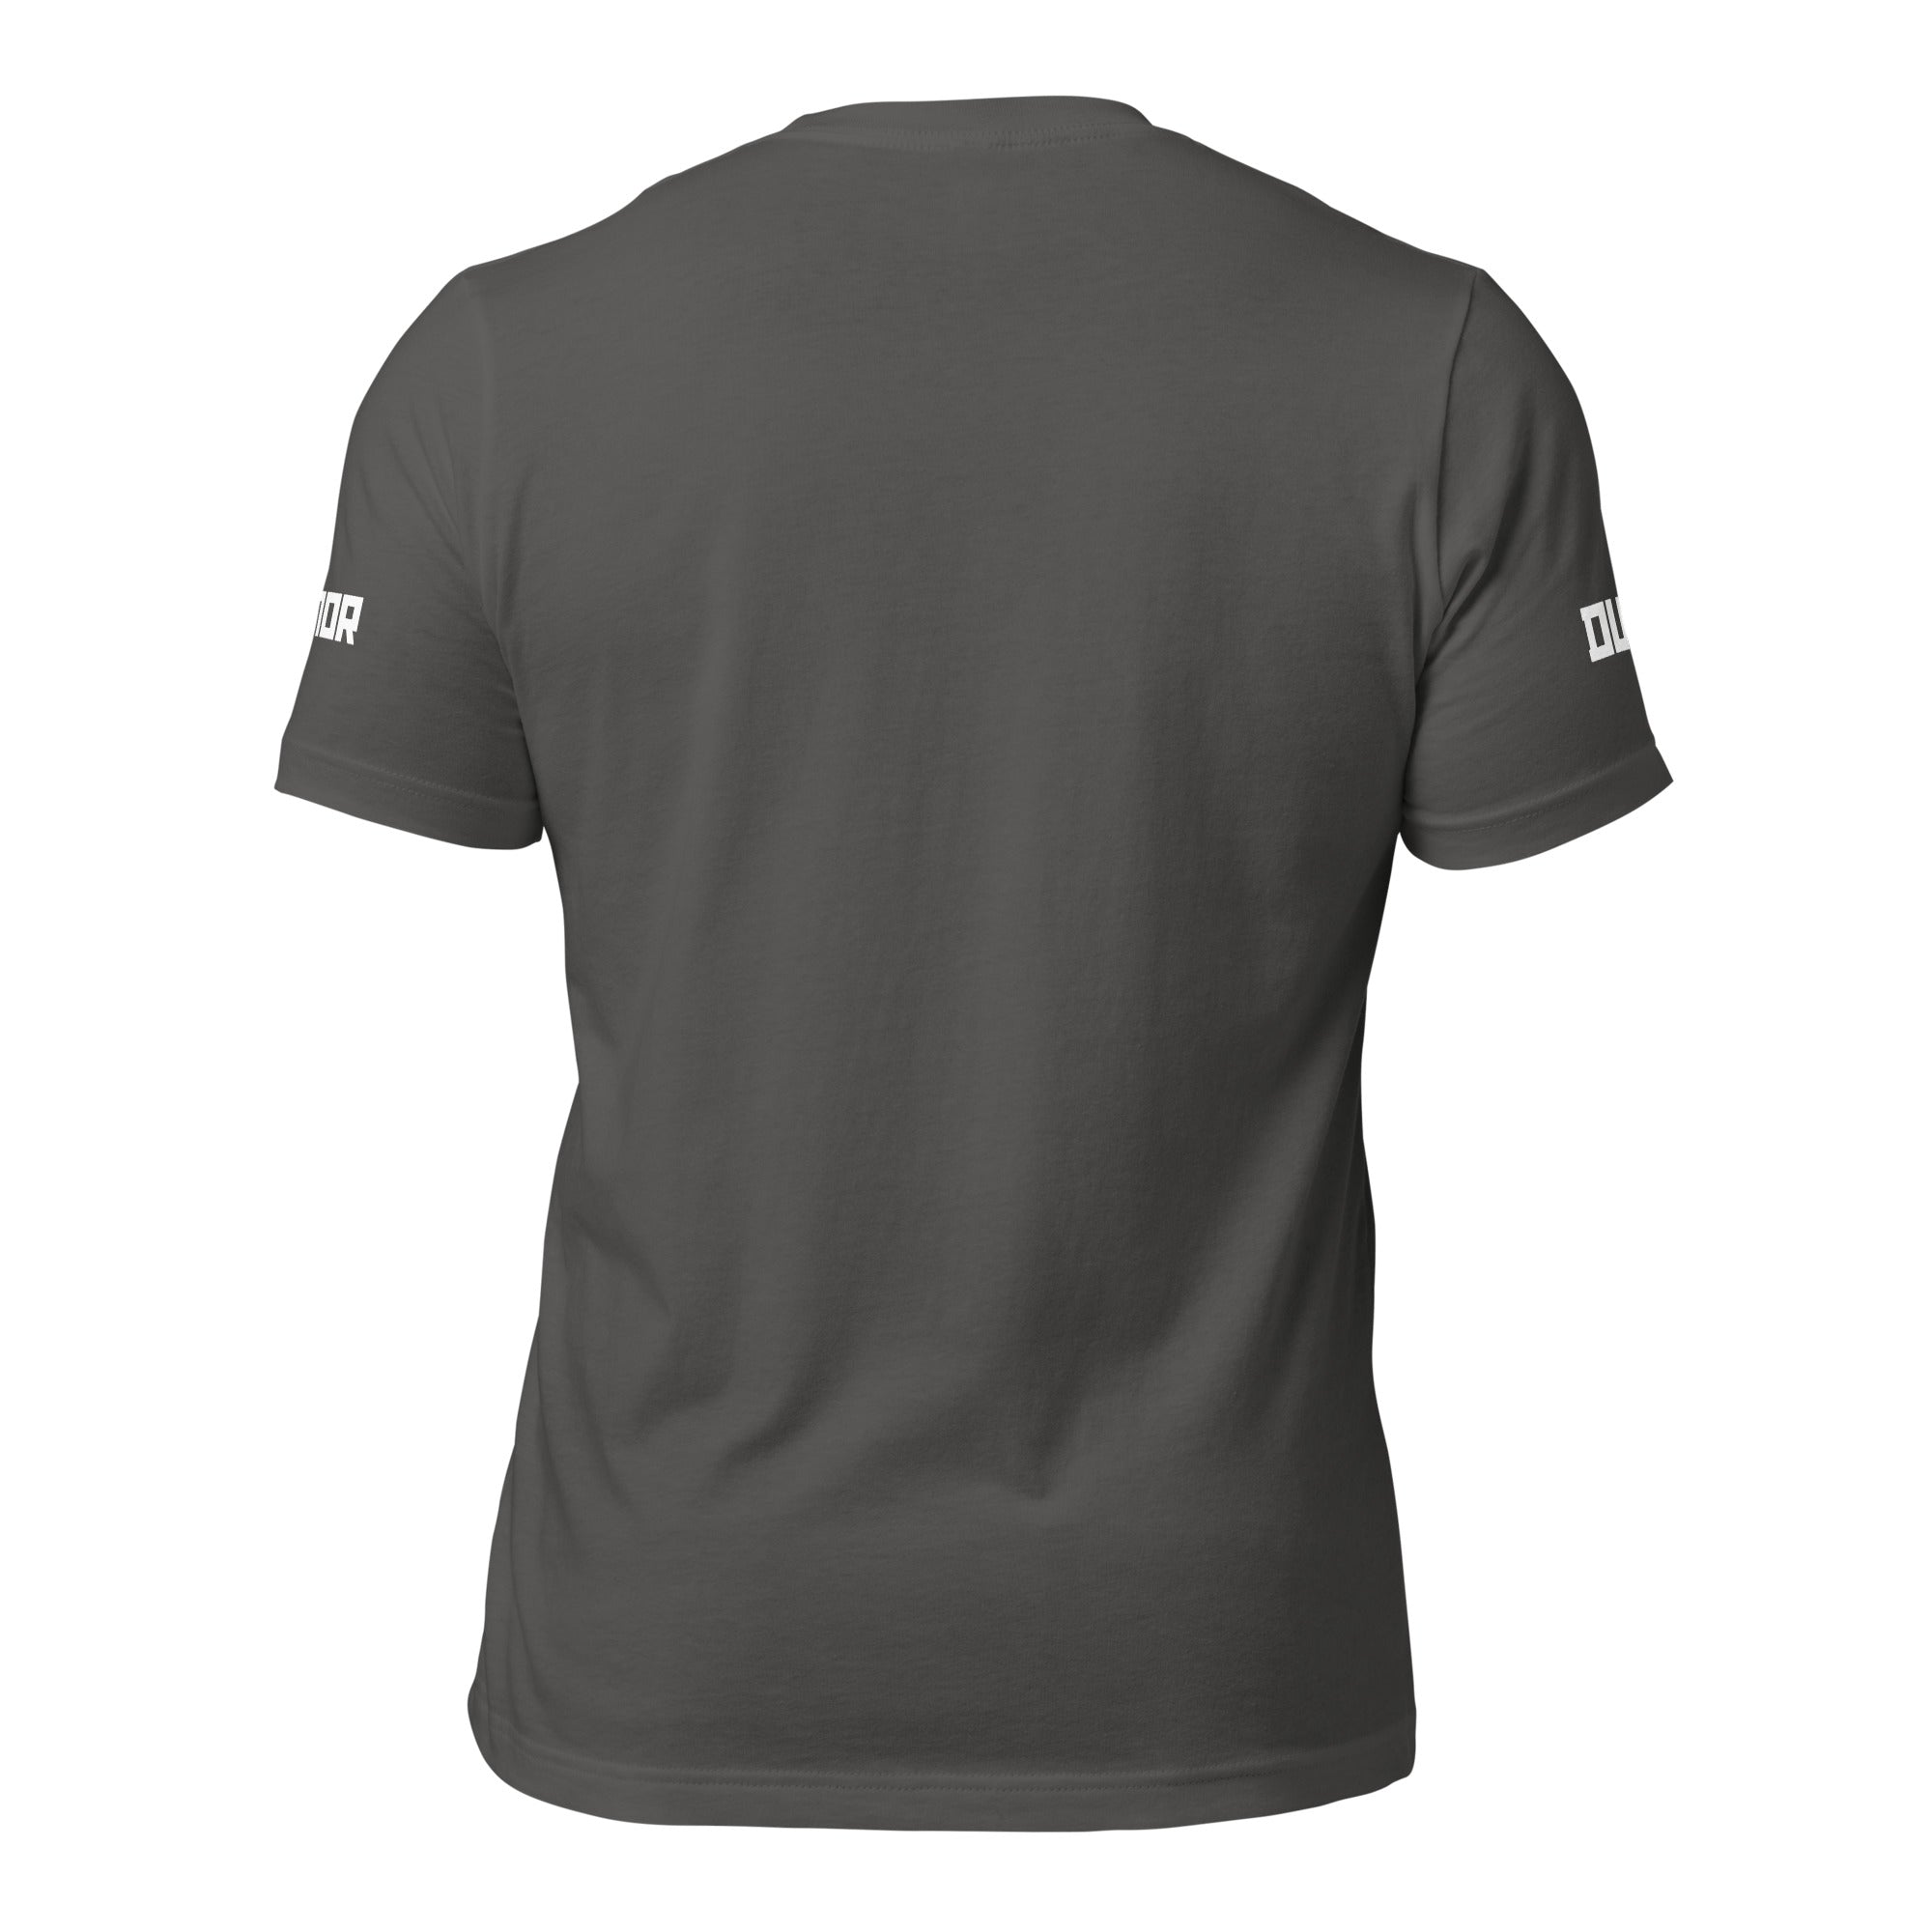 Unisex Crew Neck T-Shirt - America Duty Honor - GRAPHIC T-SHIRTS